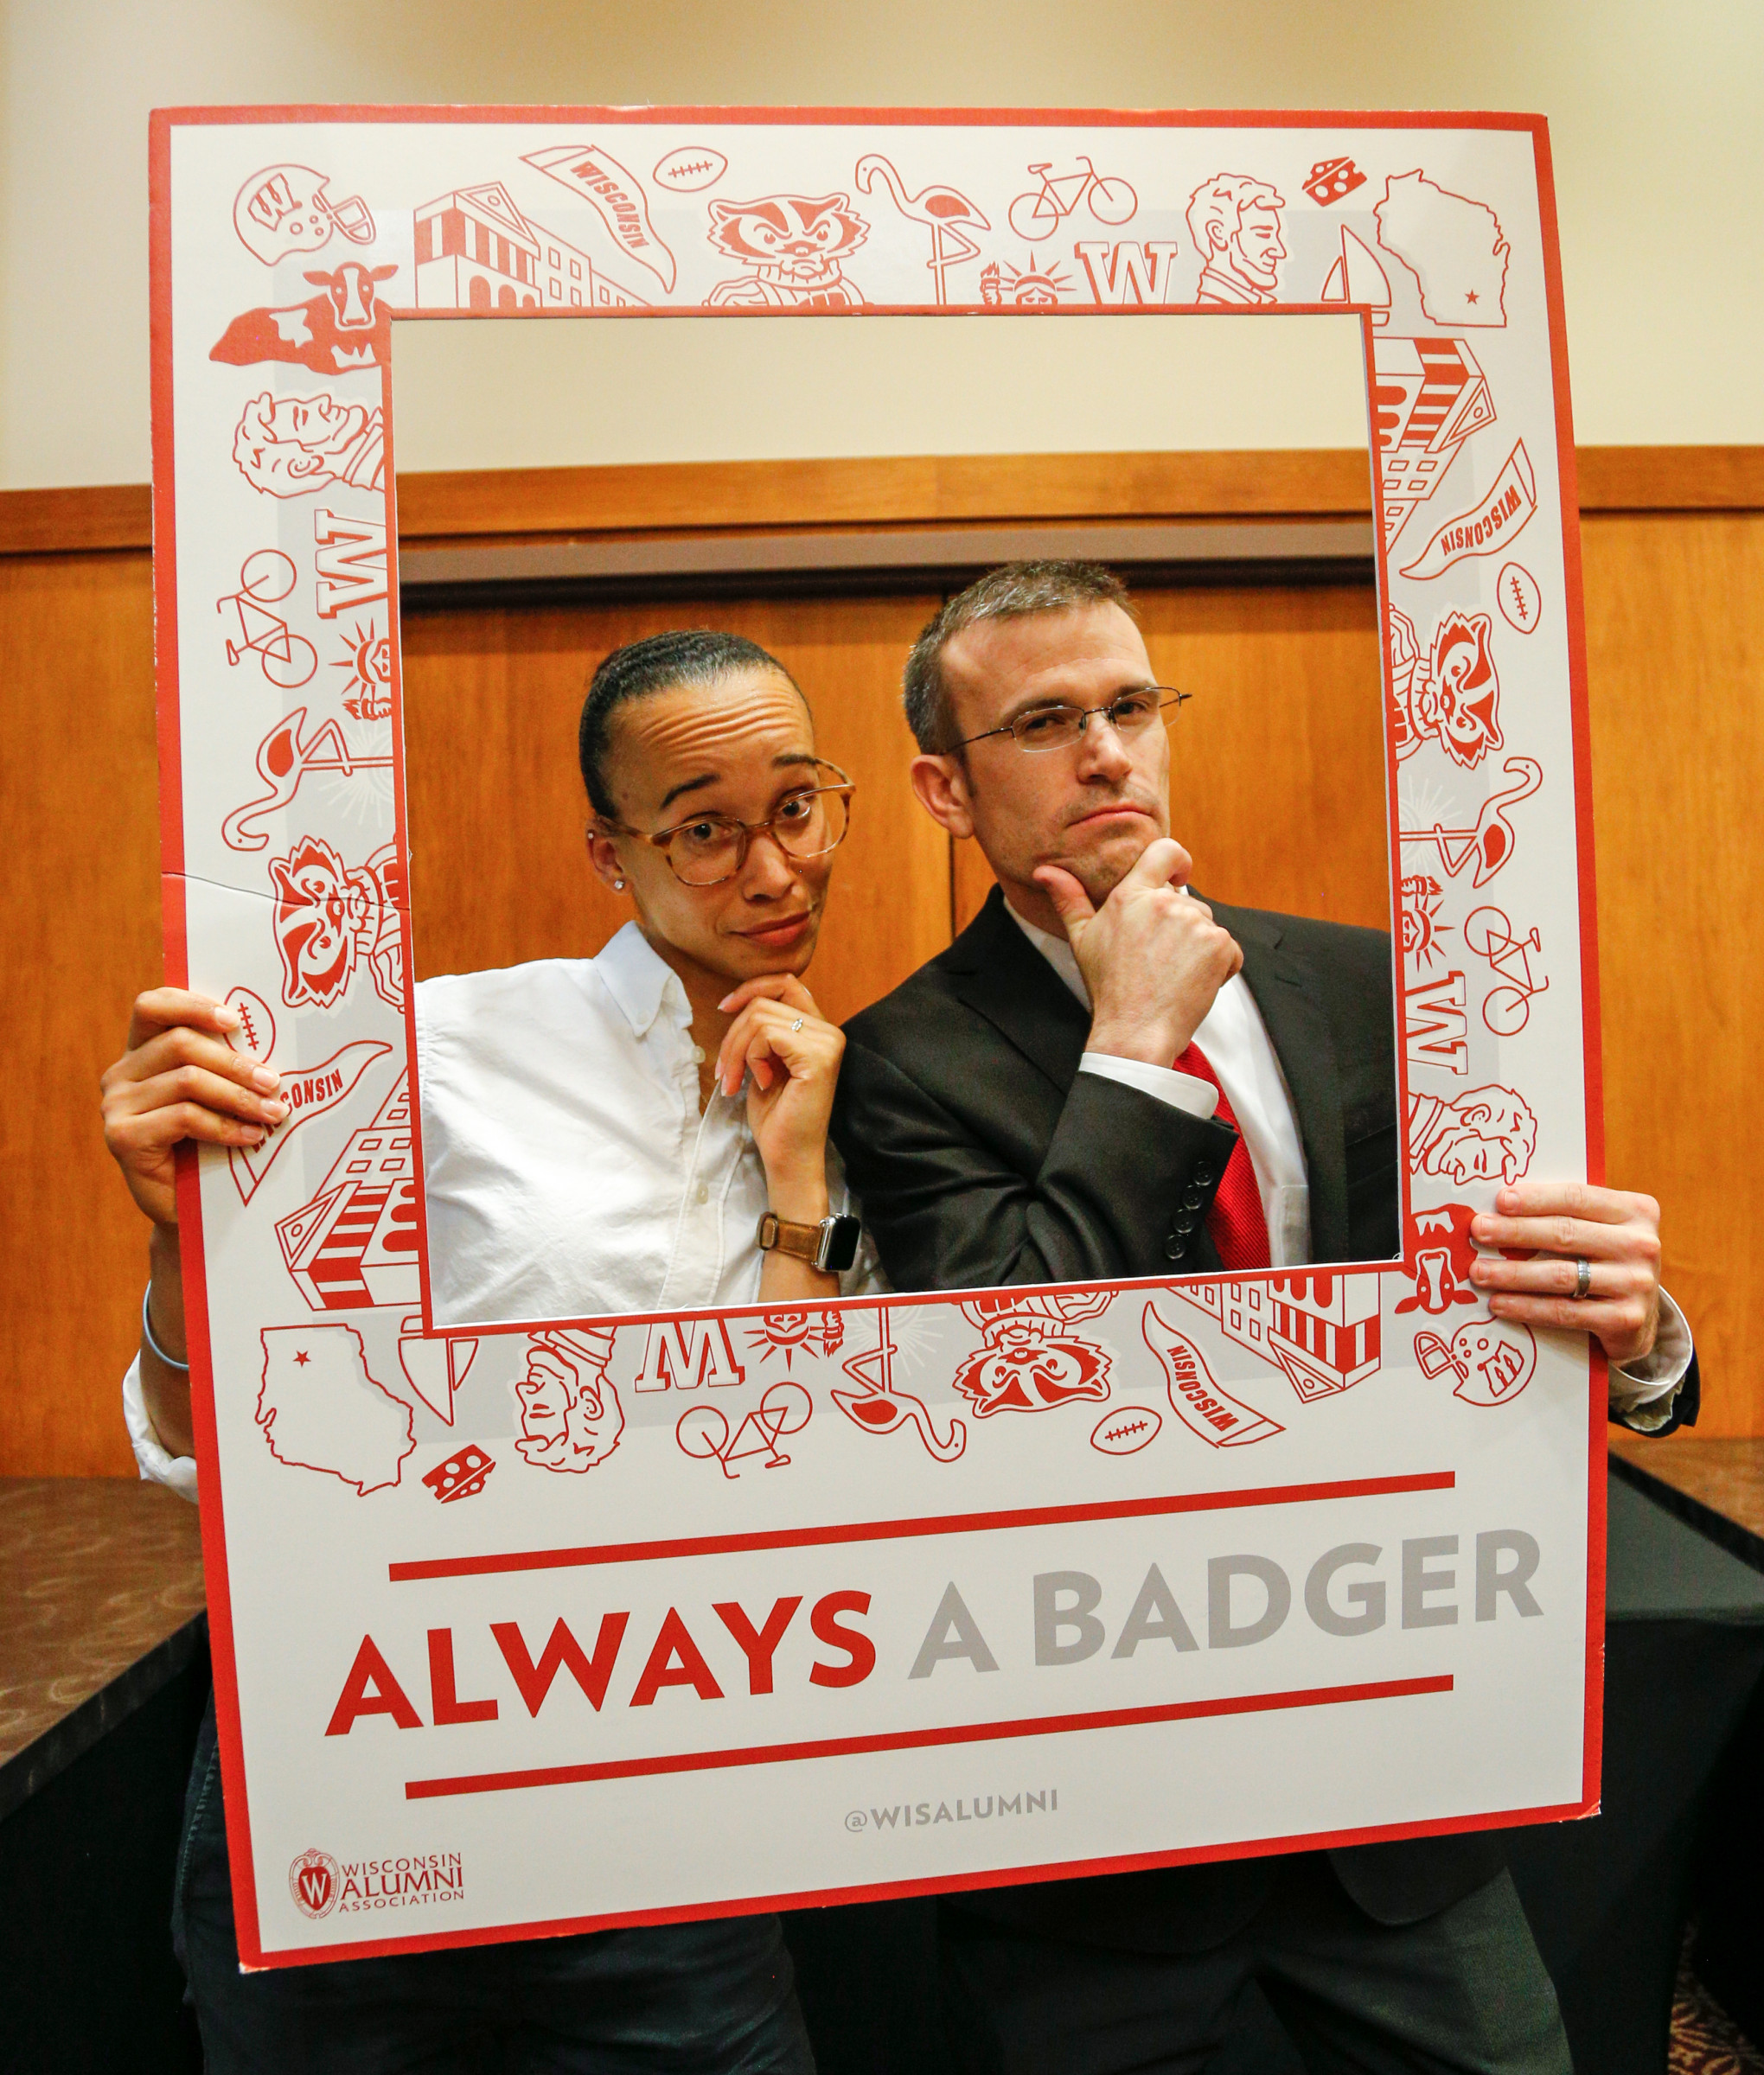 Always a Badger frame with alumni